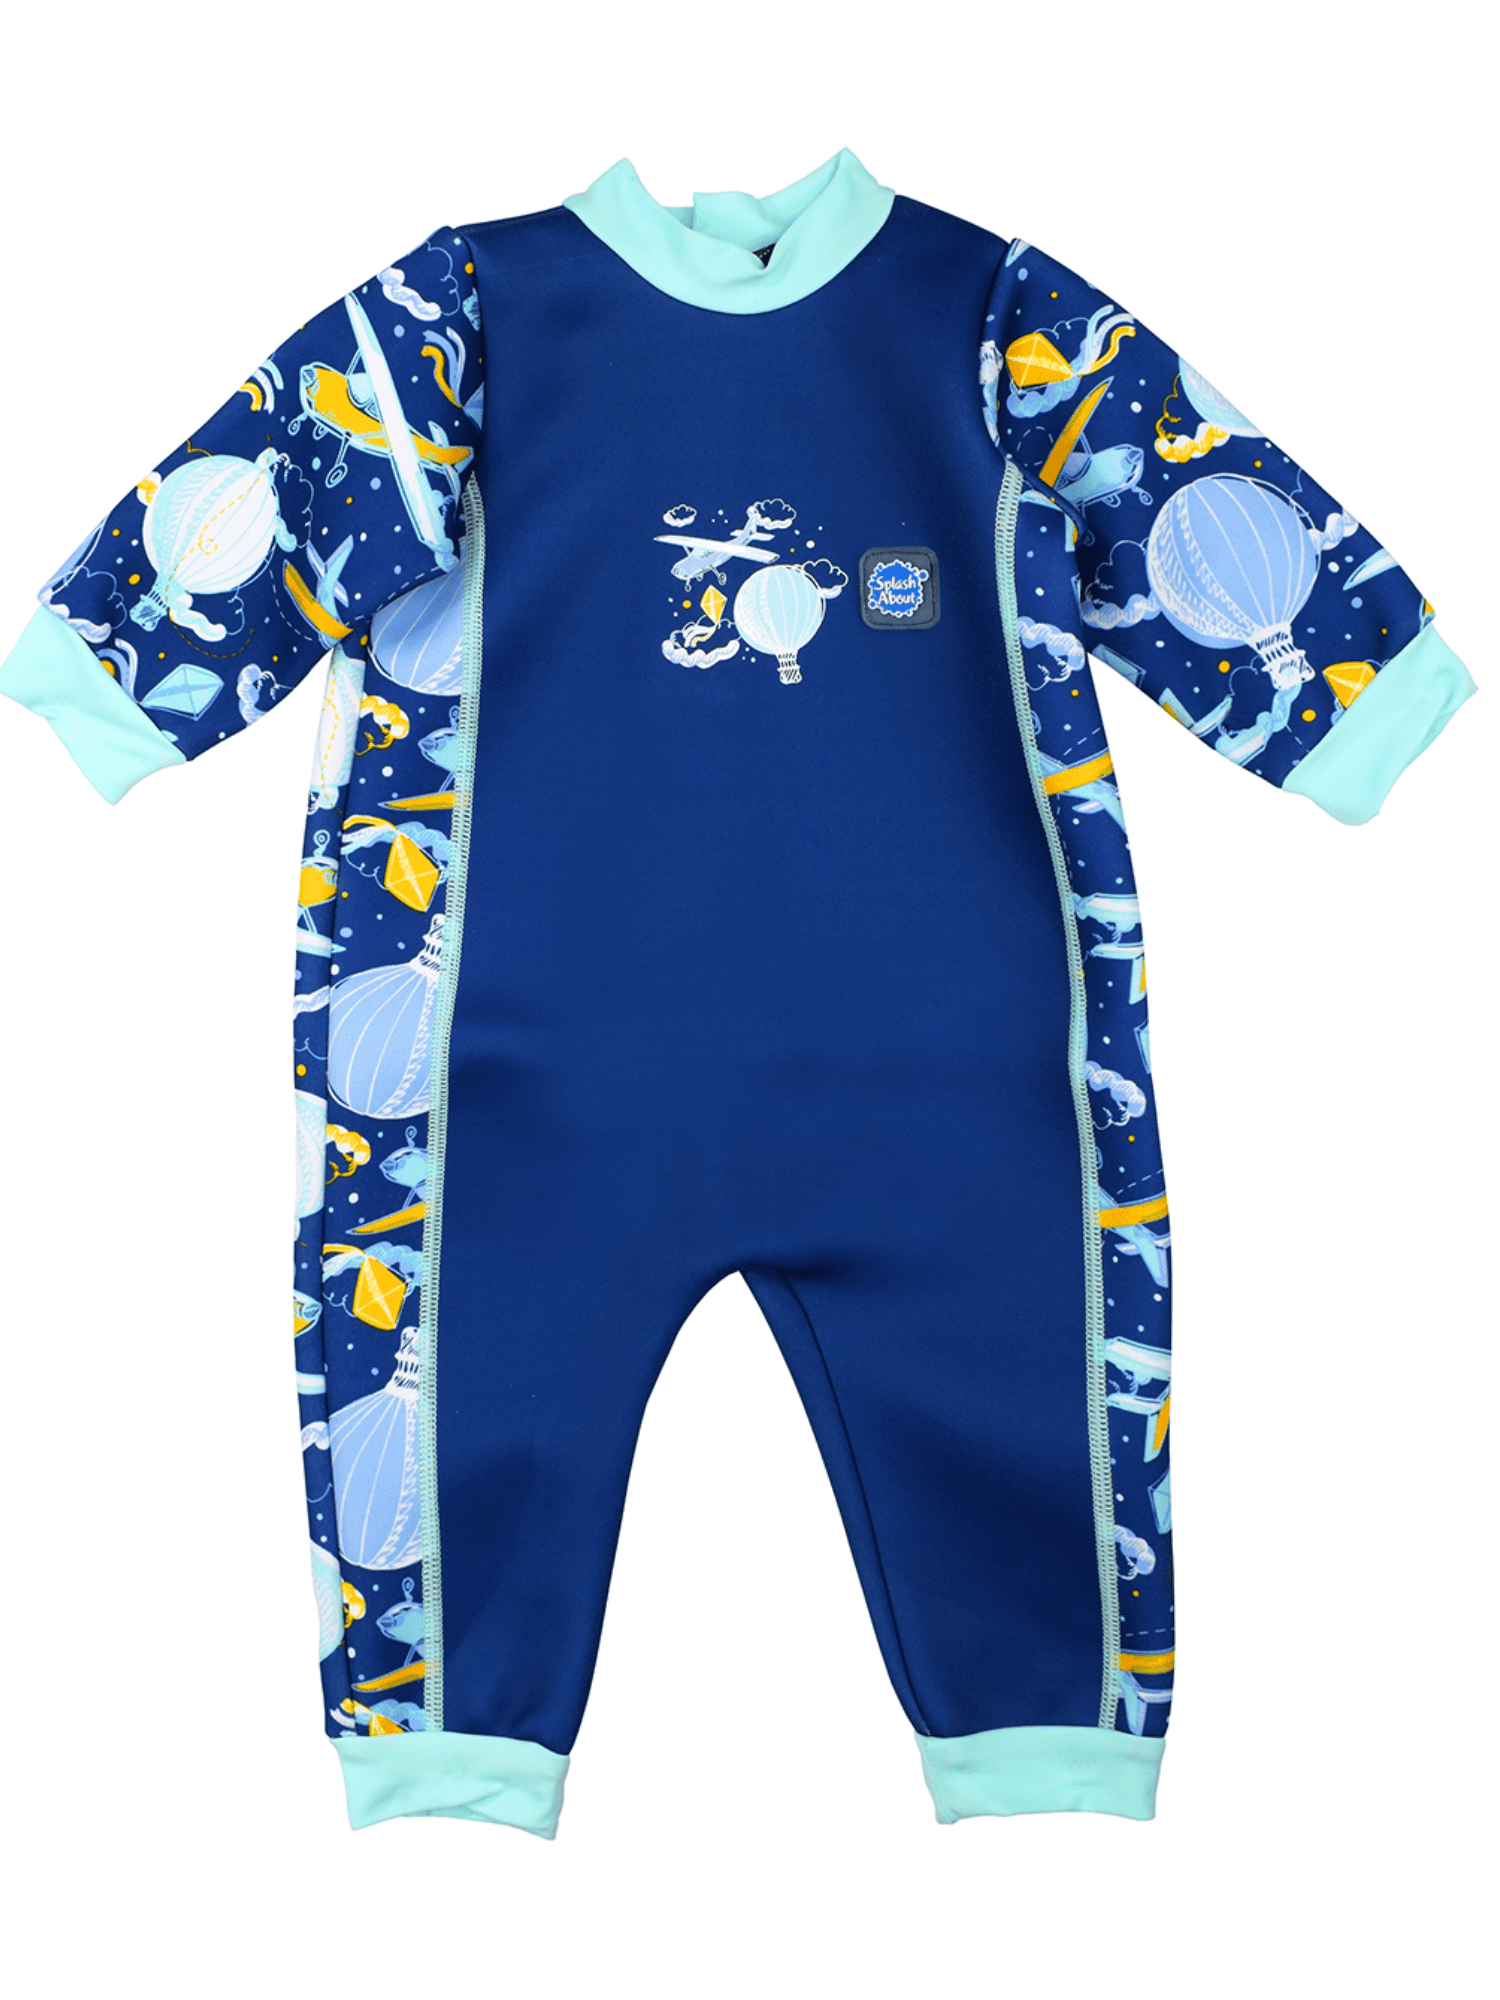 Baby and Toddler Neoprene and TPU Warming Wetsuits, Baby Swimwear